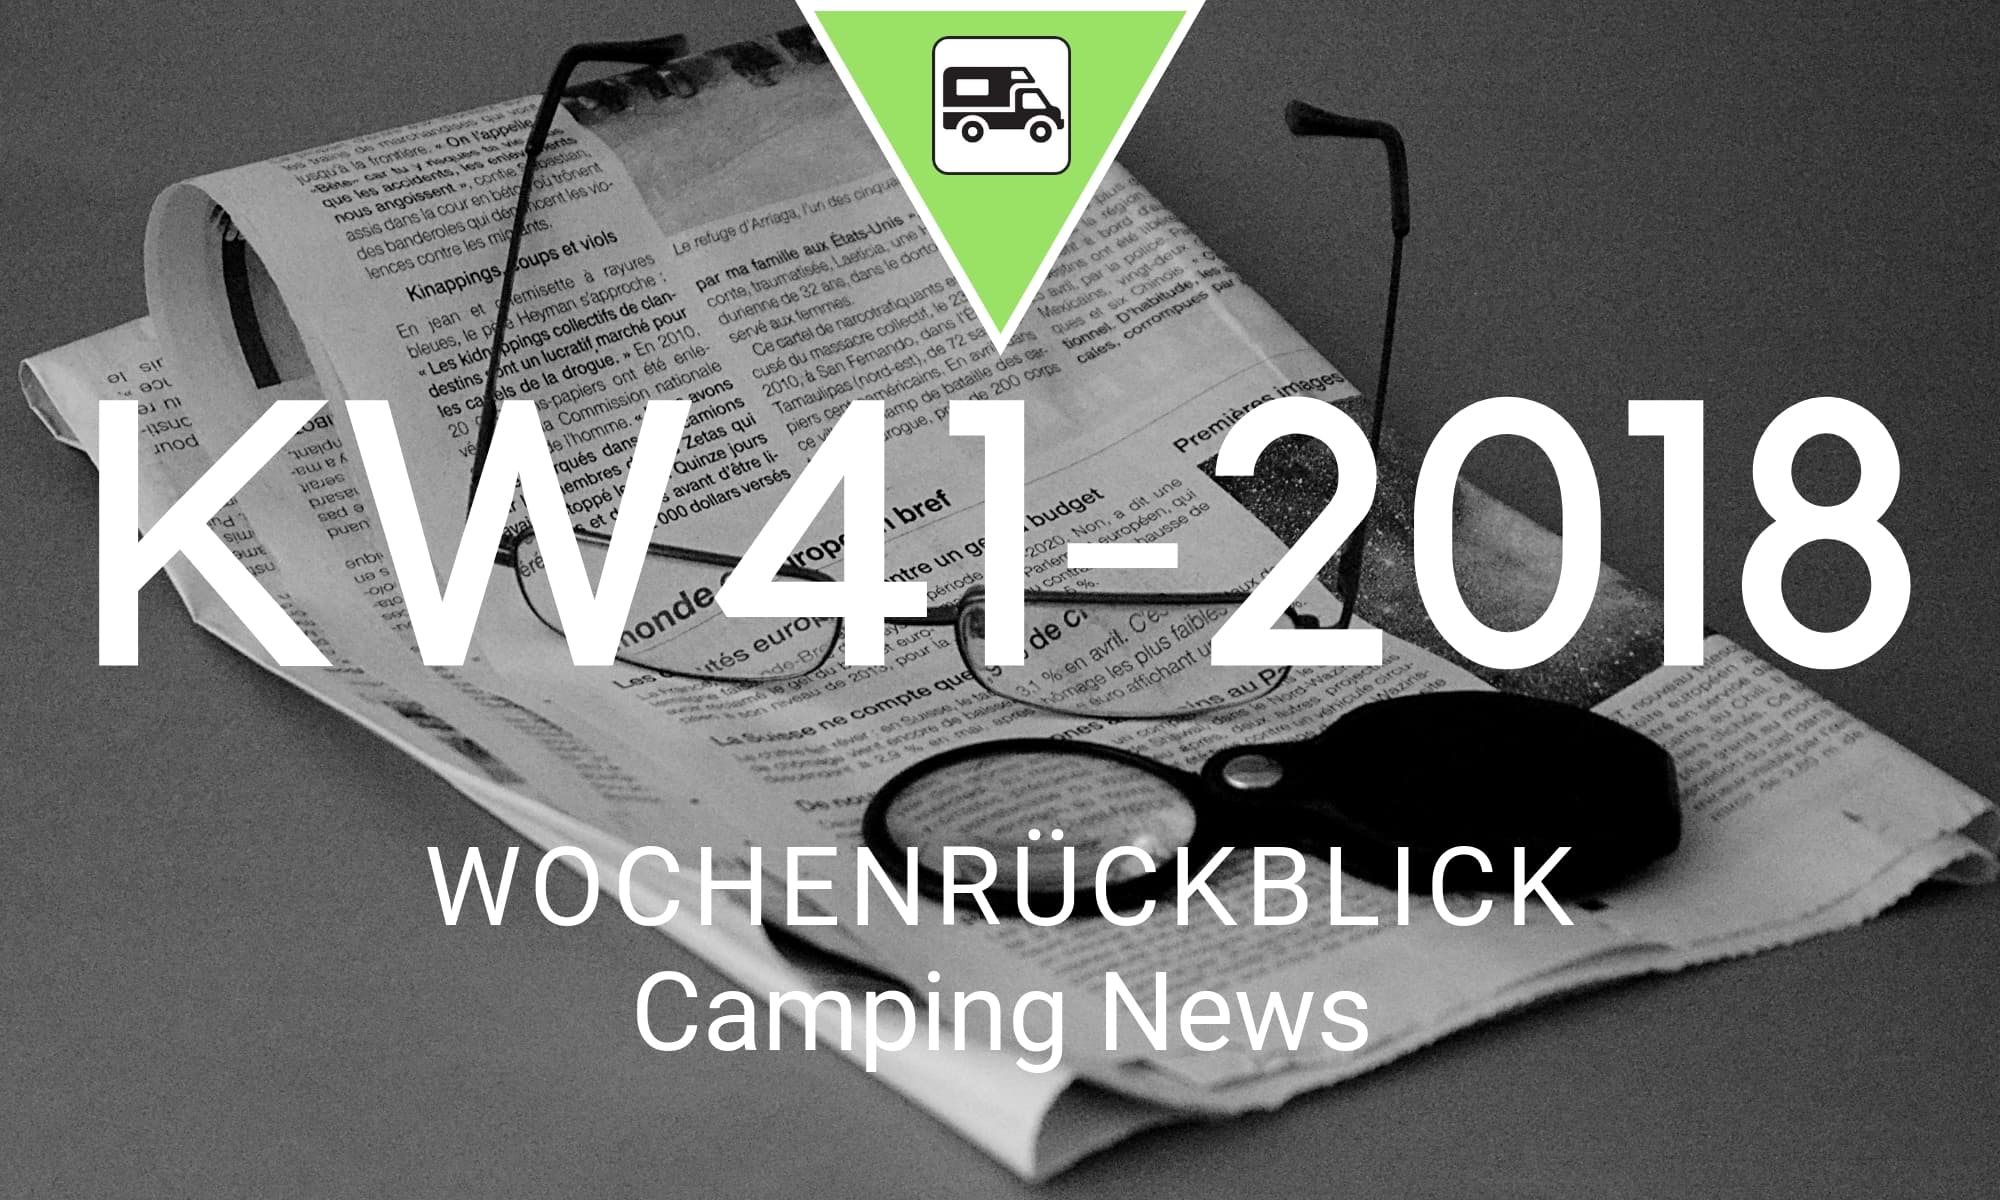 Wochenrückblick Camping News KW41-2018